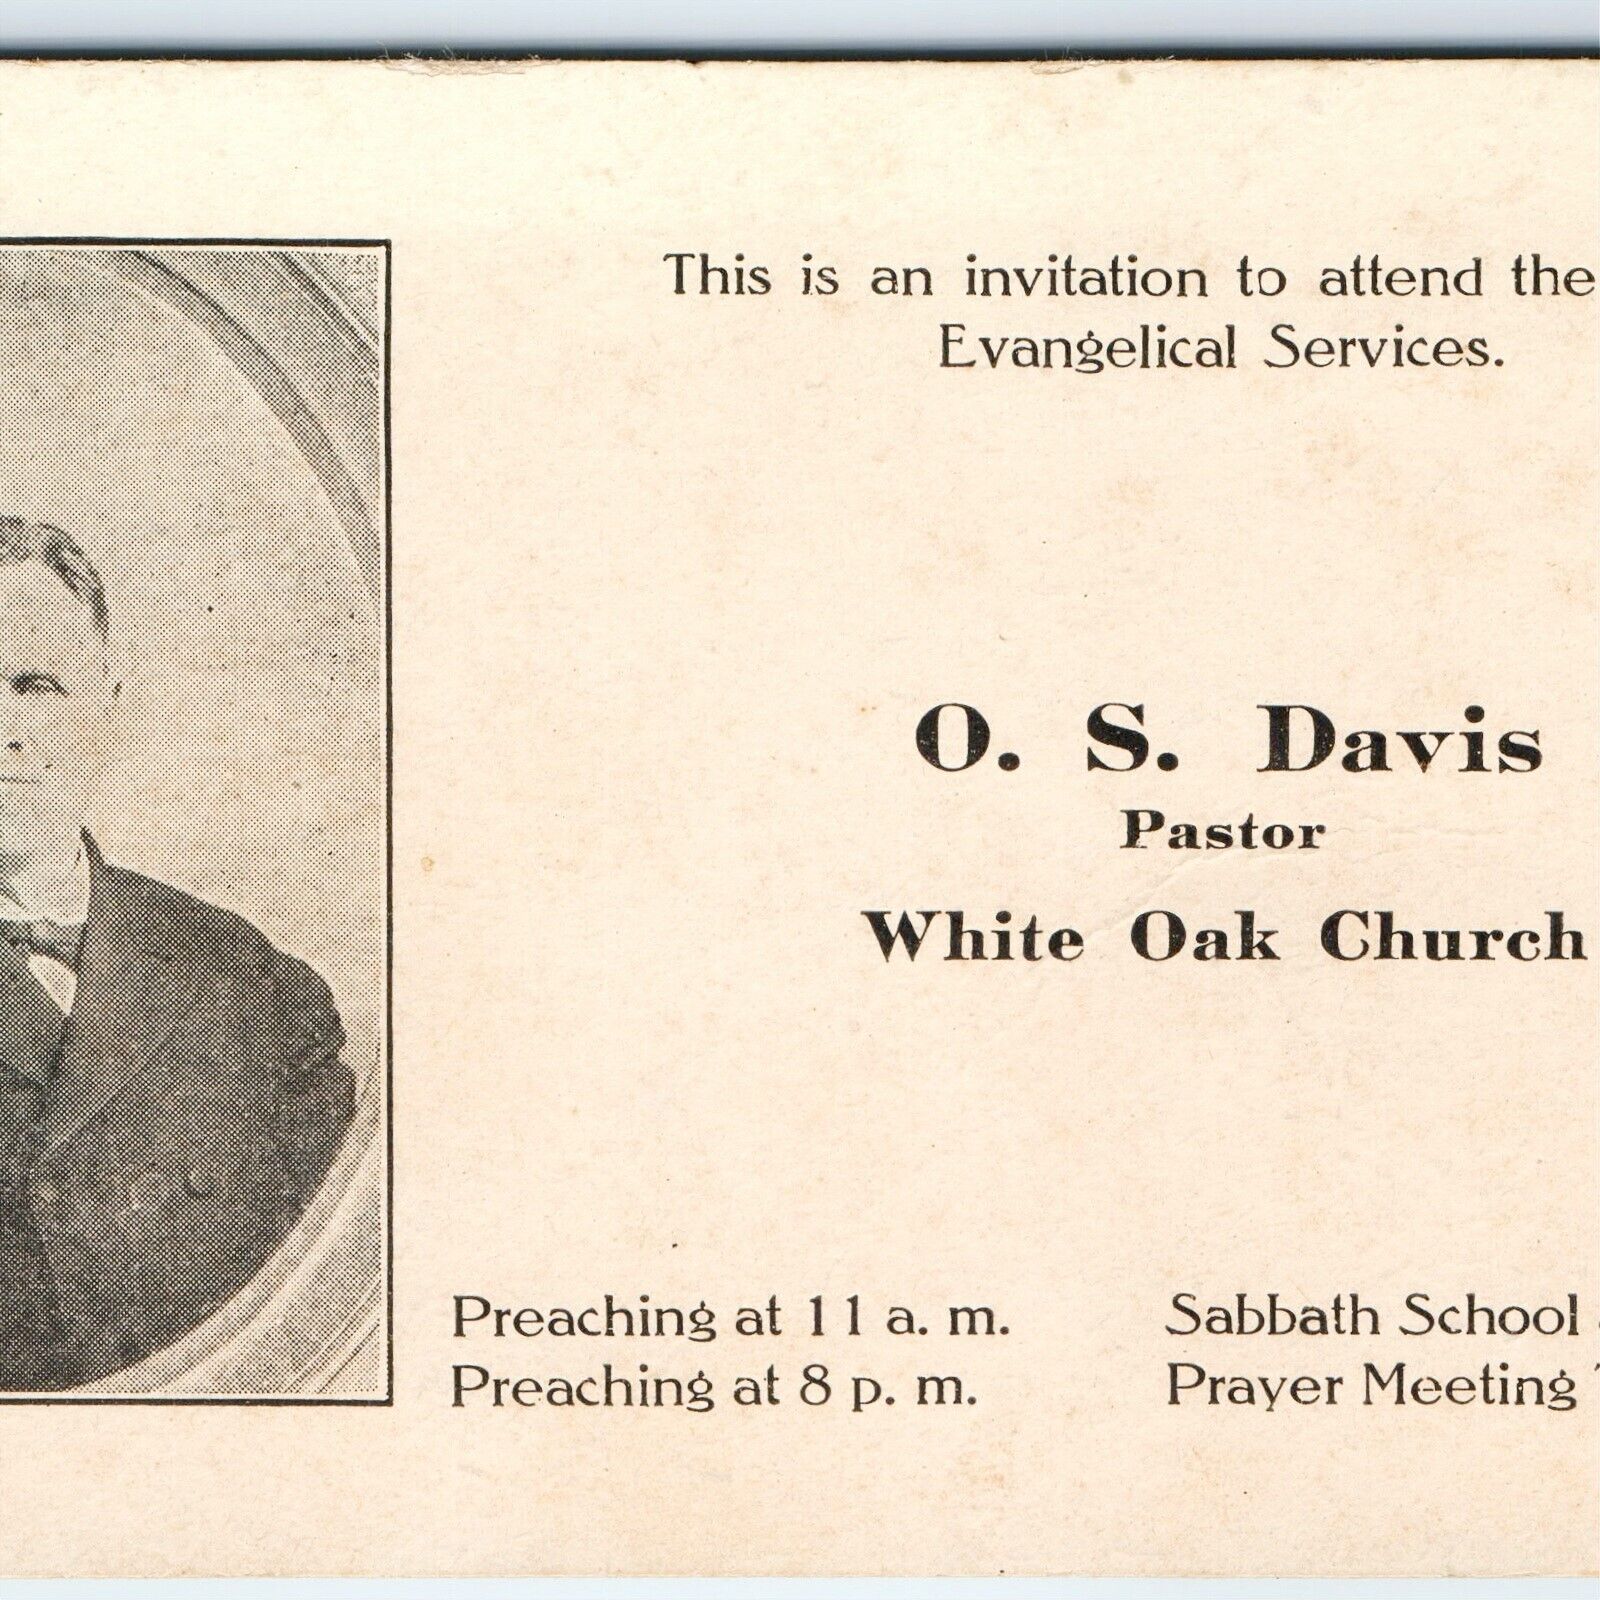 c1910s Jones Co Greenfield IA OS Davis Pastor White Oak Church Card Martelle C56